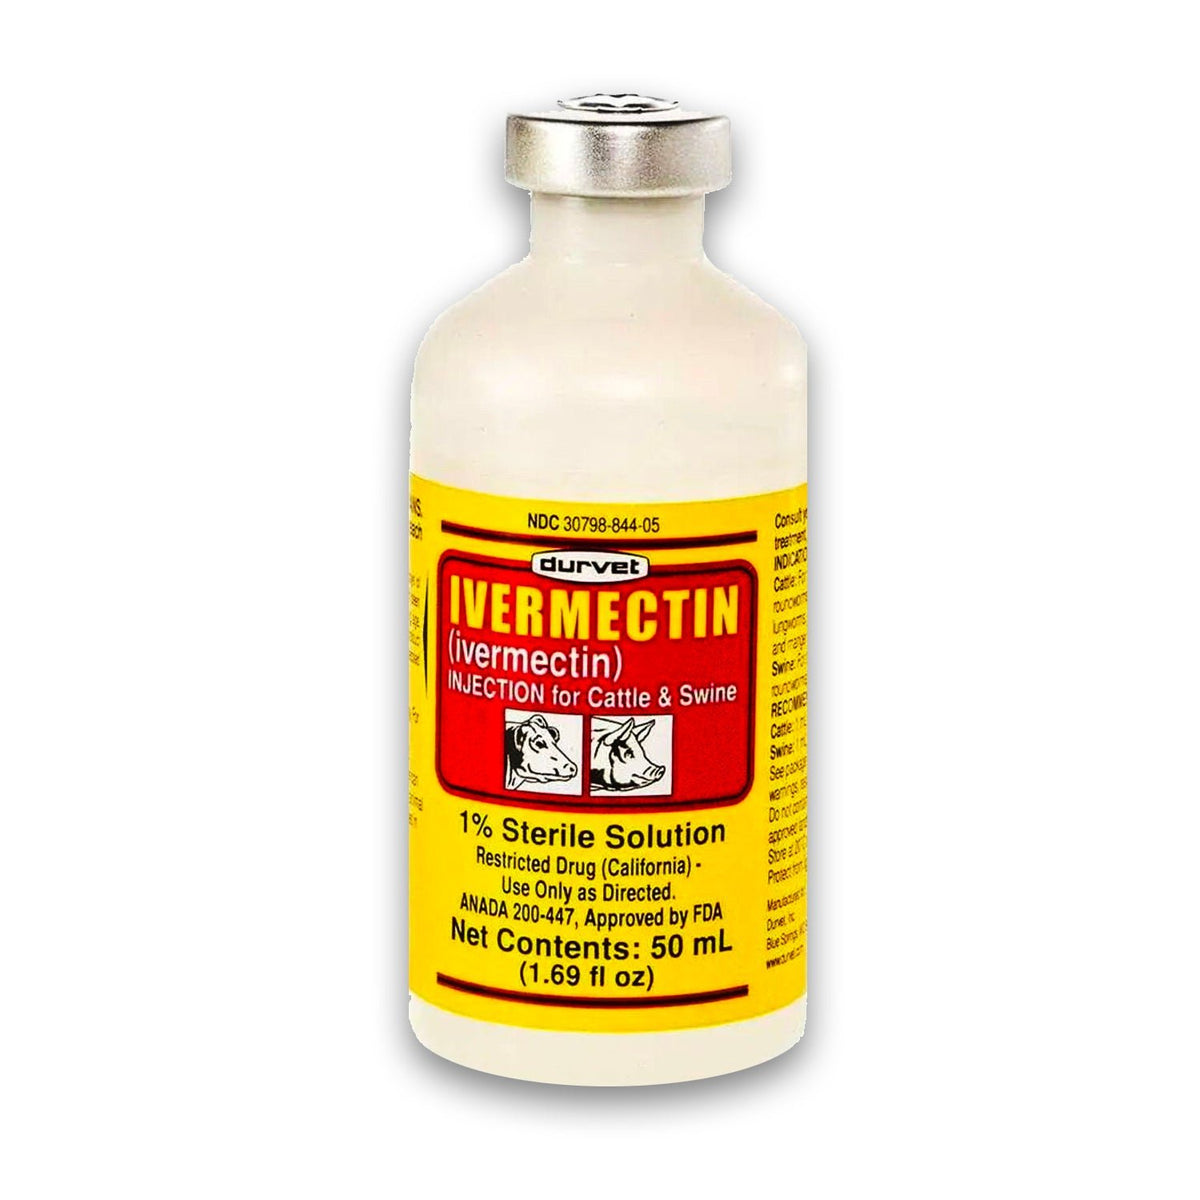 DurVet Ivermectin 1% Injectable, 50ml - The First Aid Gear Shop